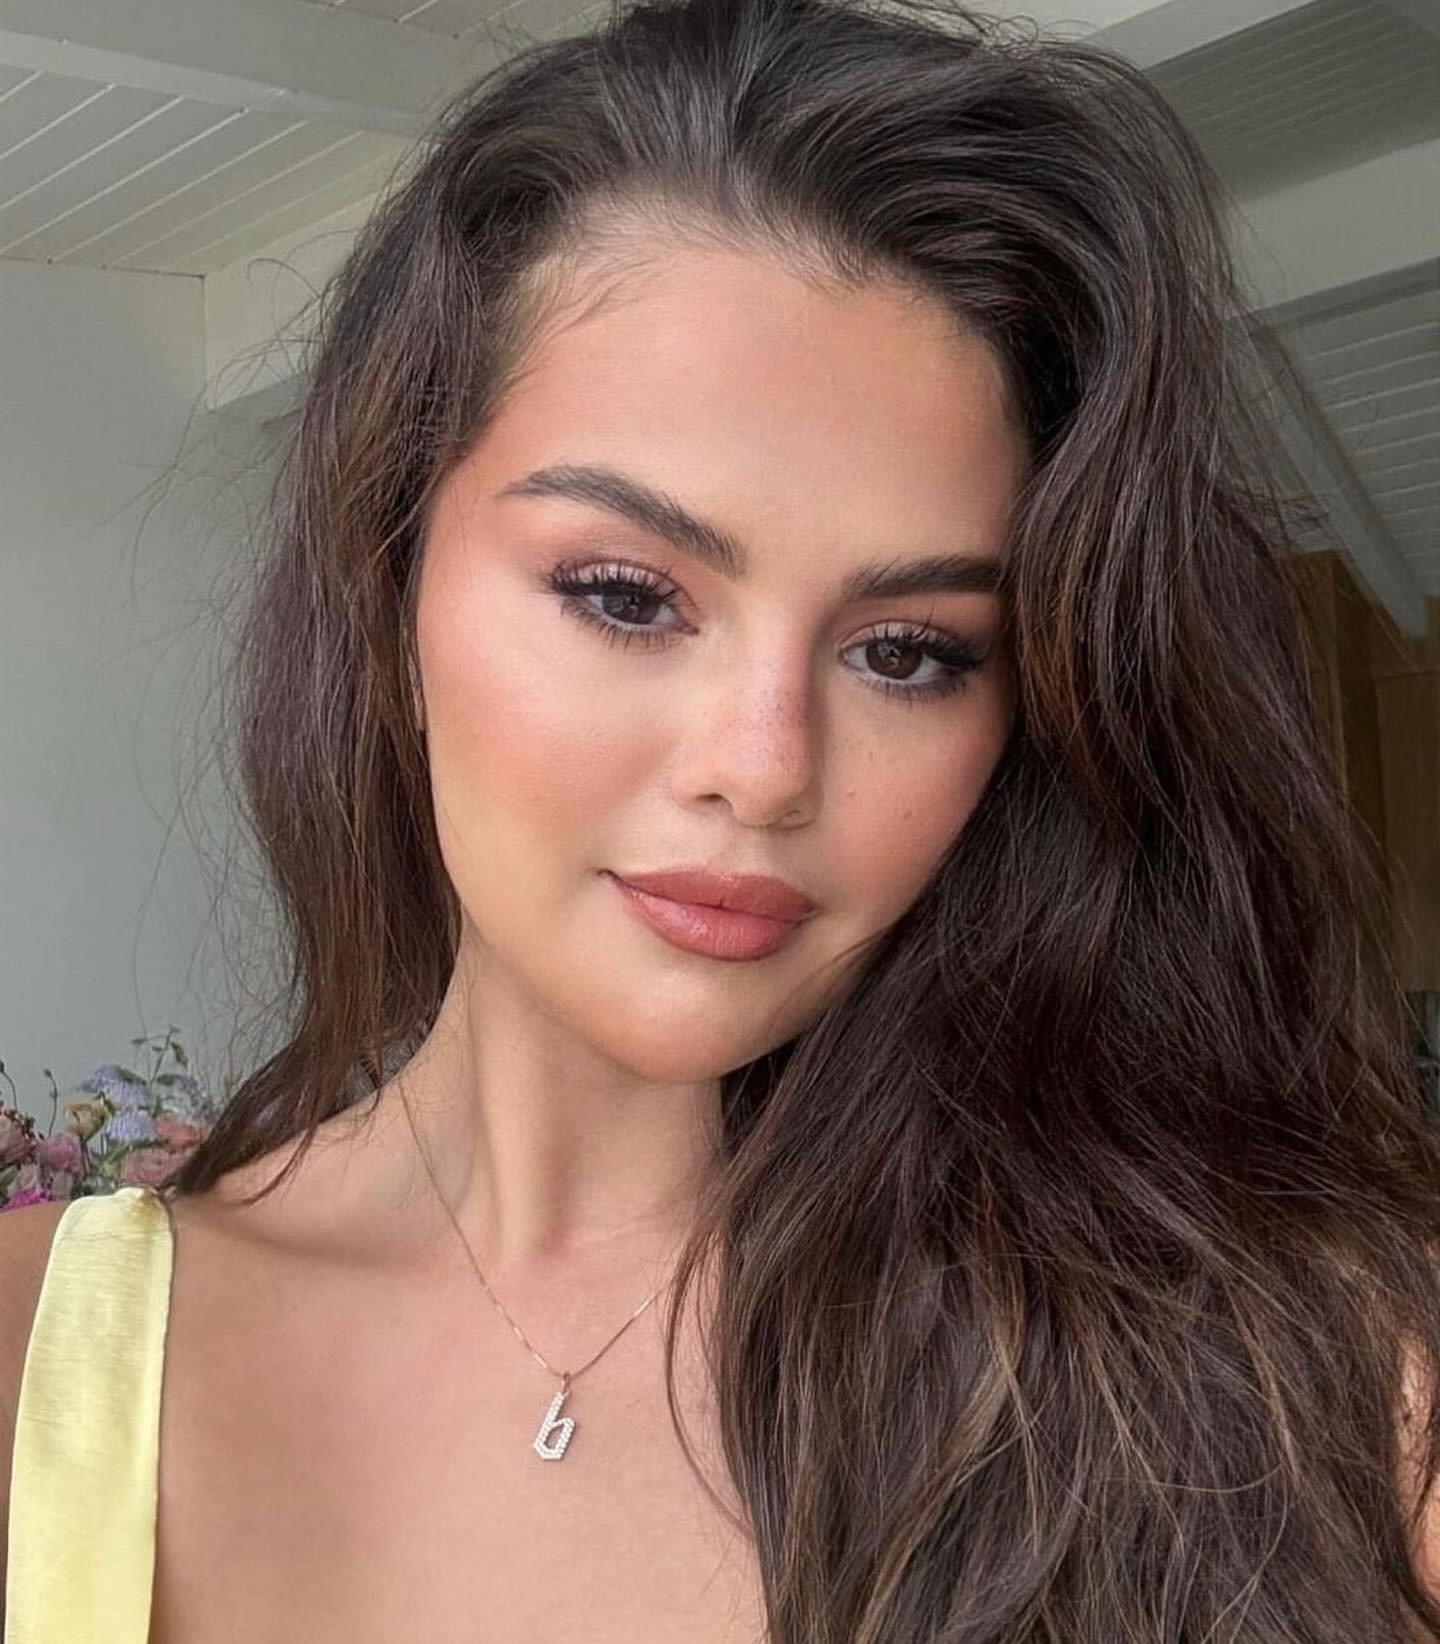 Image: Selena Gomez on Instagram